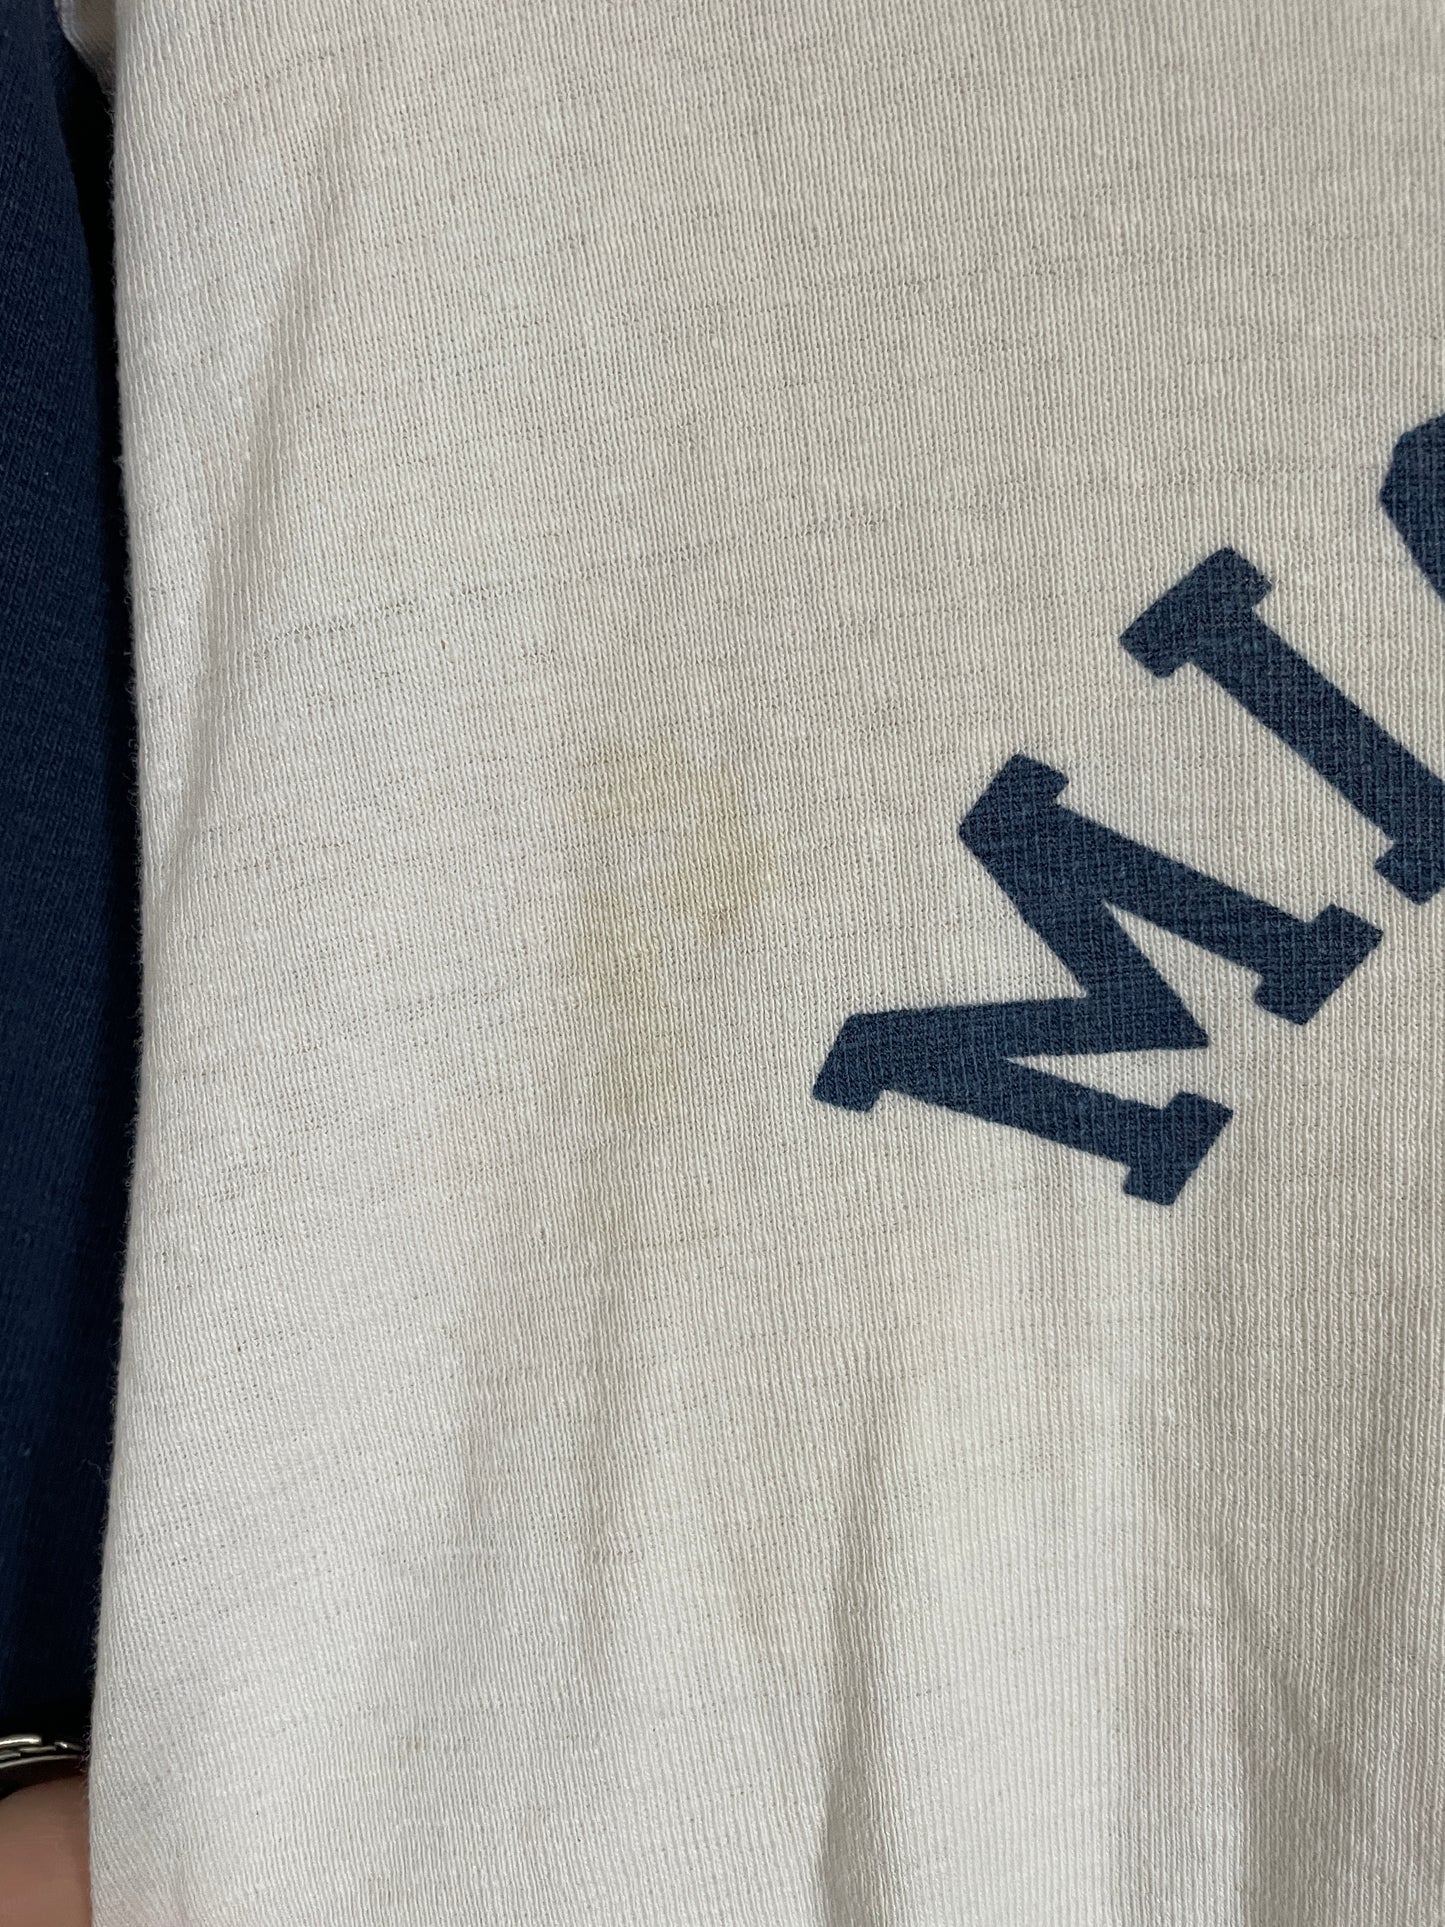 70s Michigan Baseball Shirt